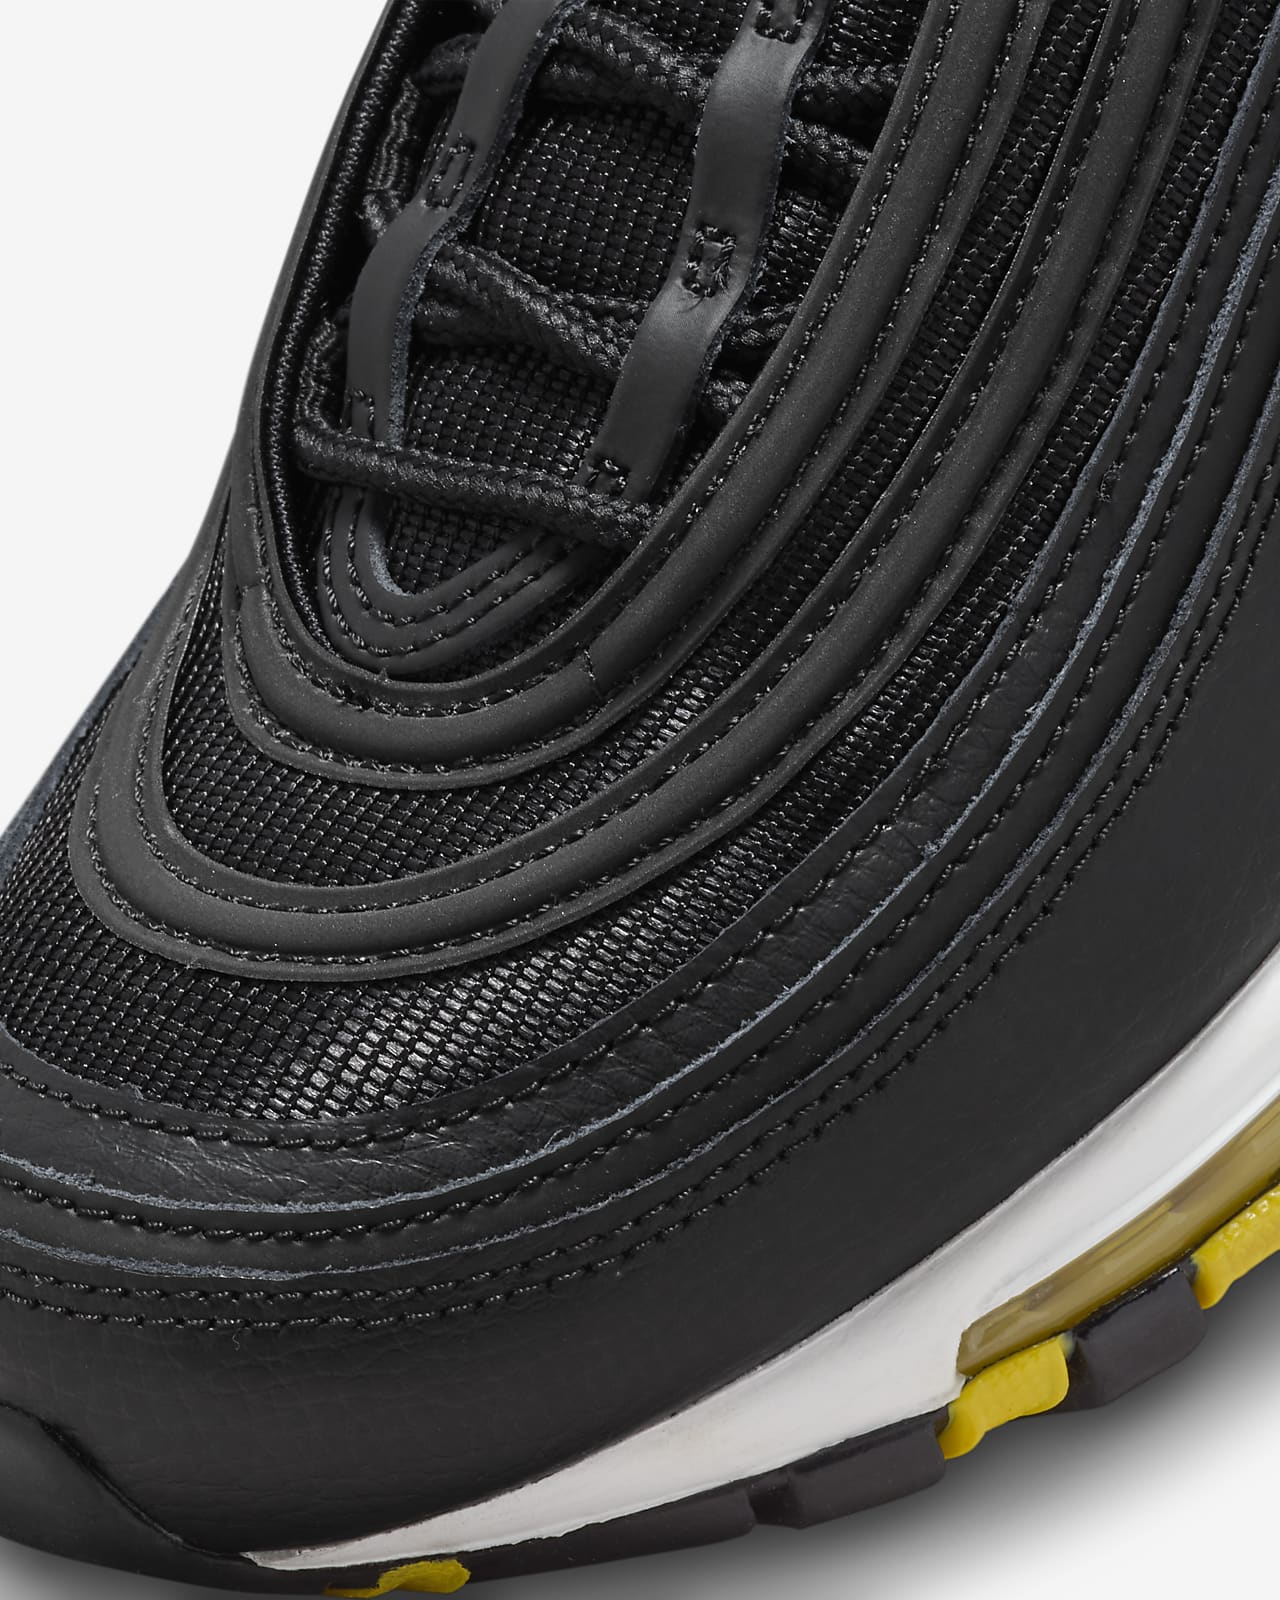 Nike Air Max 97 Premium 'Black & Gold' Release Date. Nike SNKRS GB